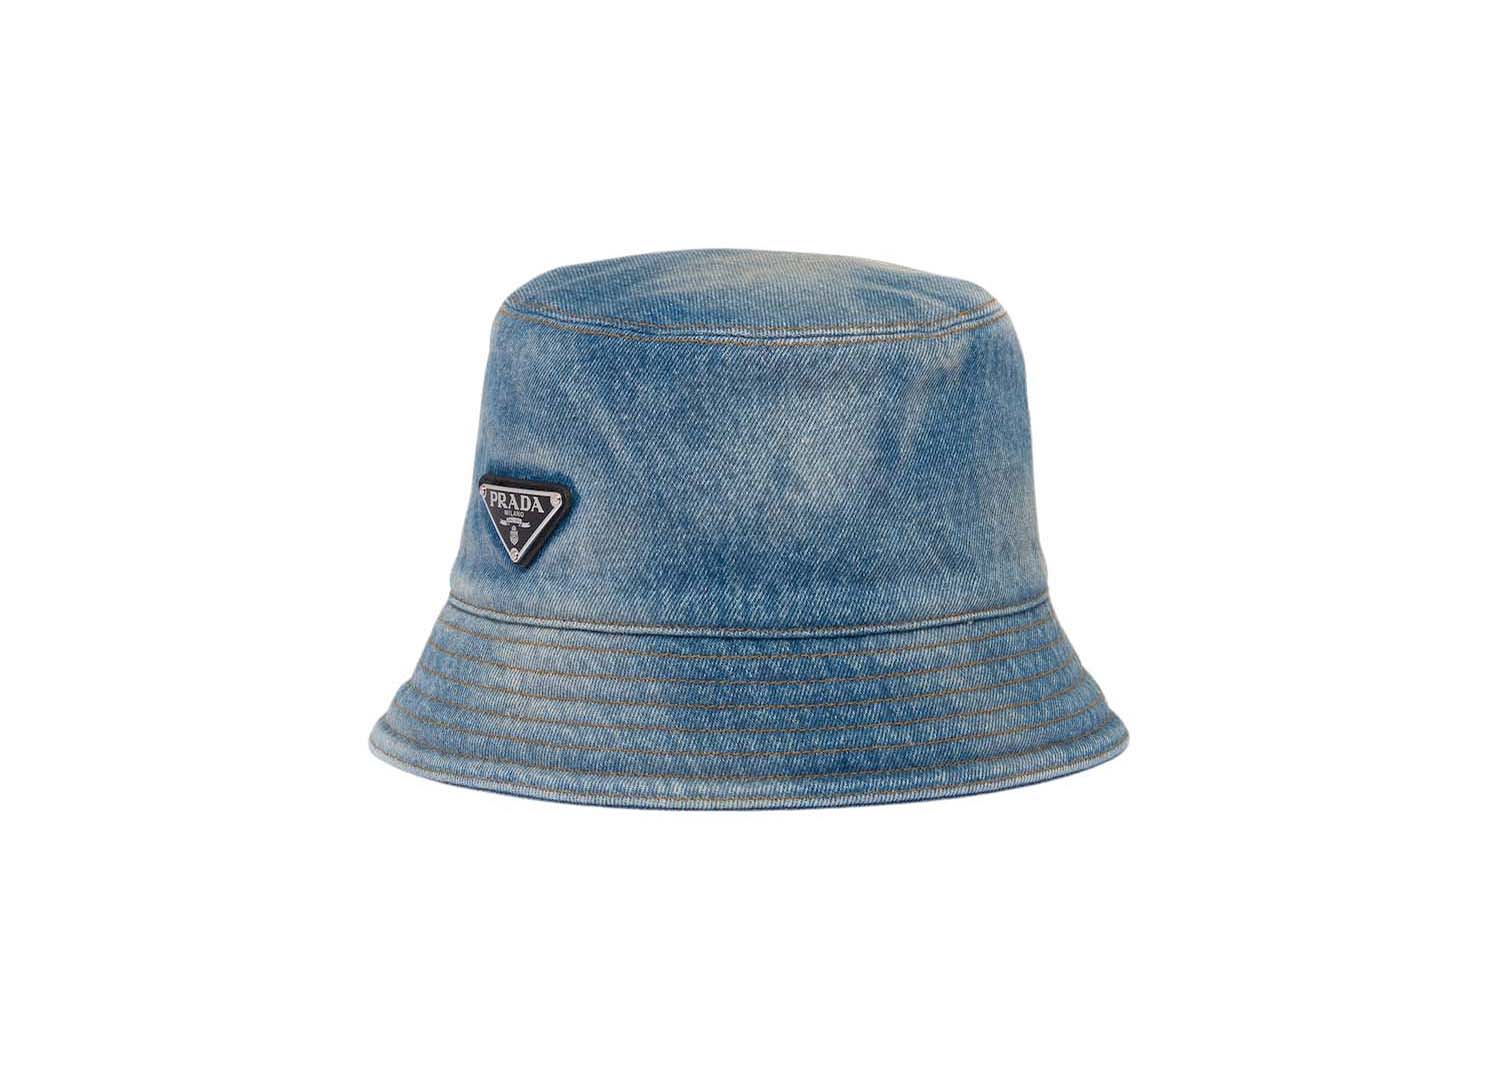 Prada Denim Bucket Hat Light Blue in Denim with Silver-tone - US